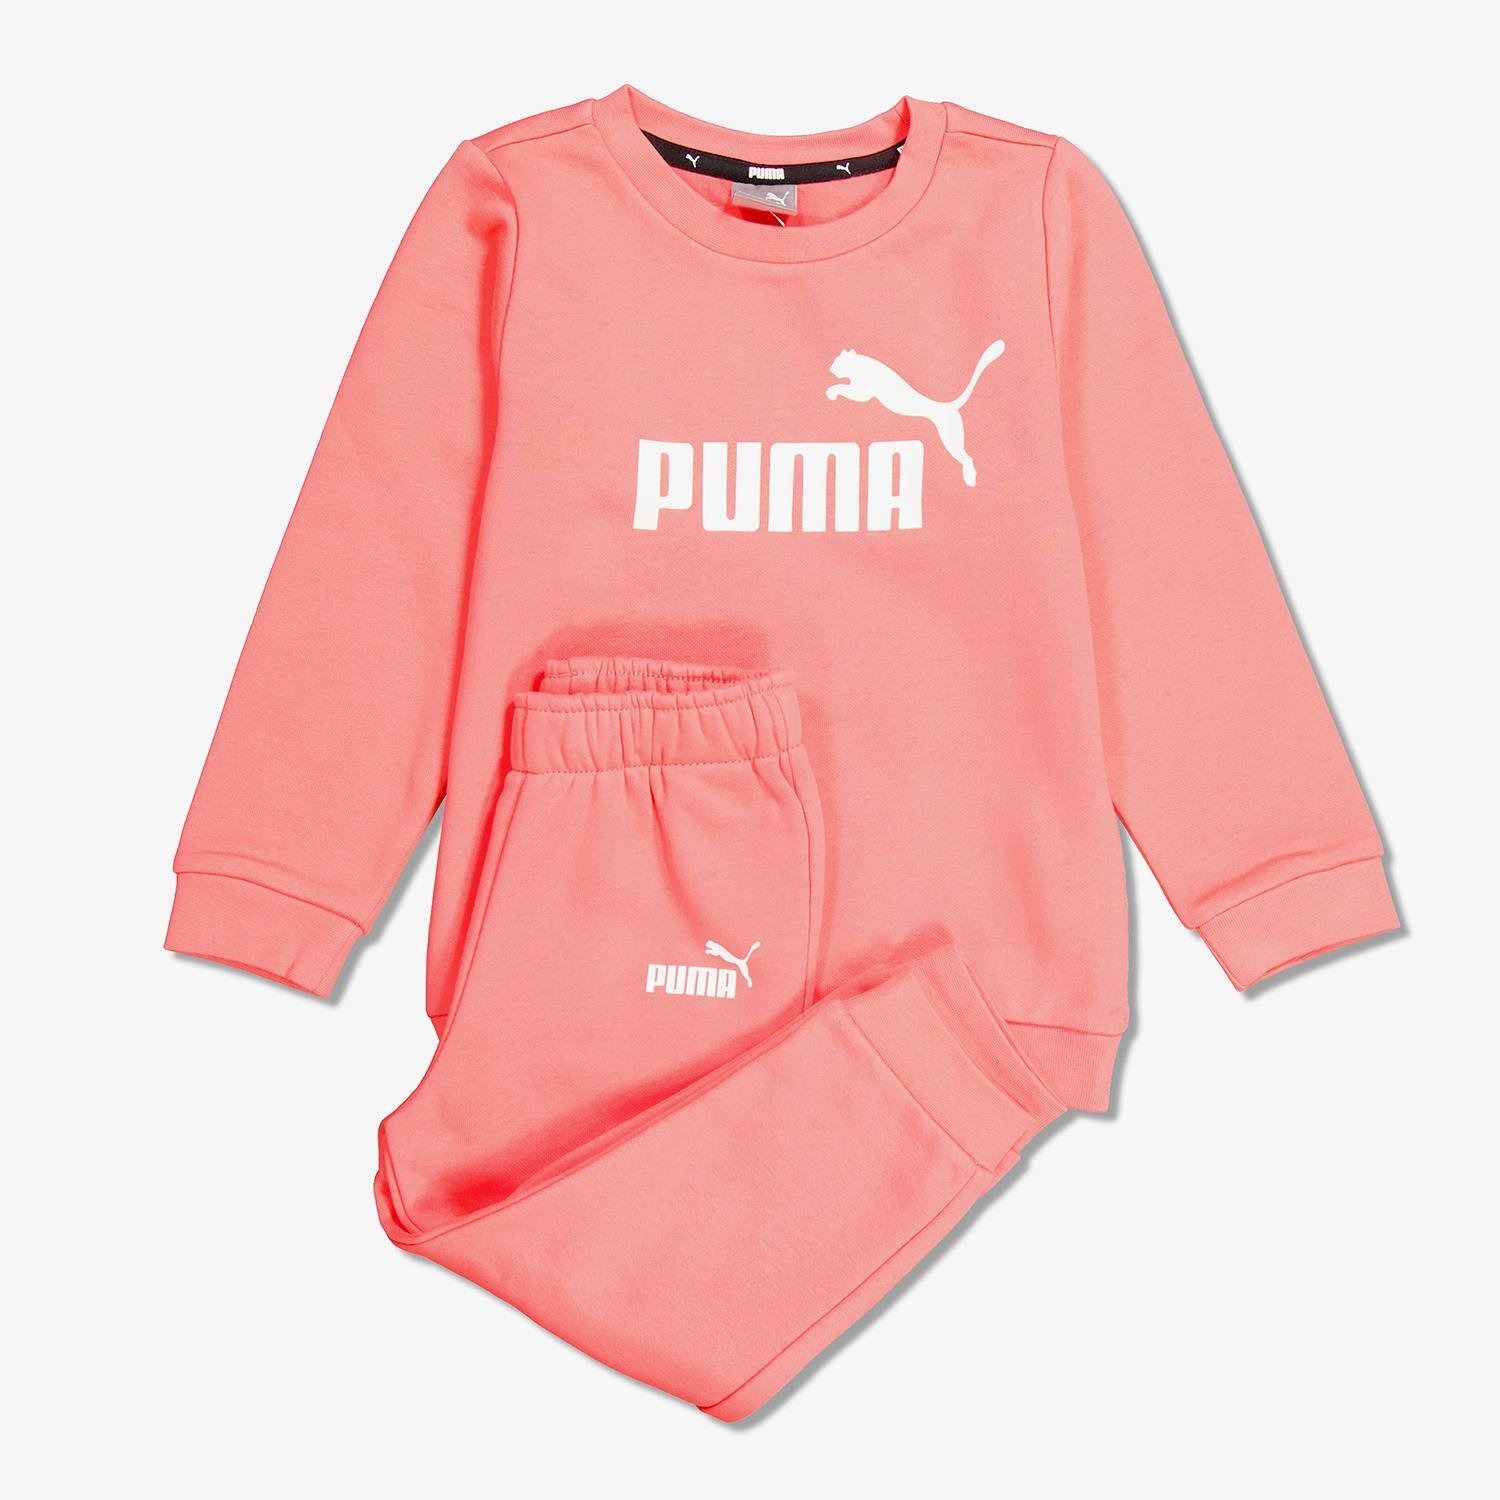 Puma Puma joggingpak roze kinderen kinderen